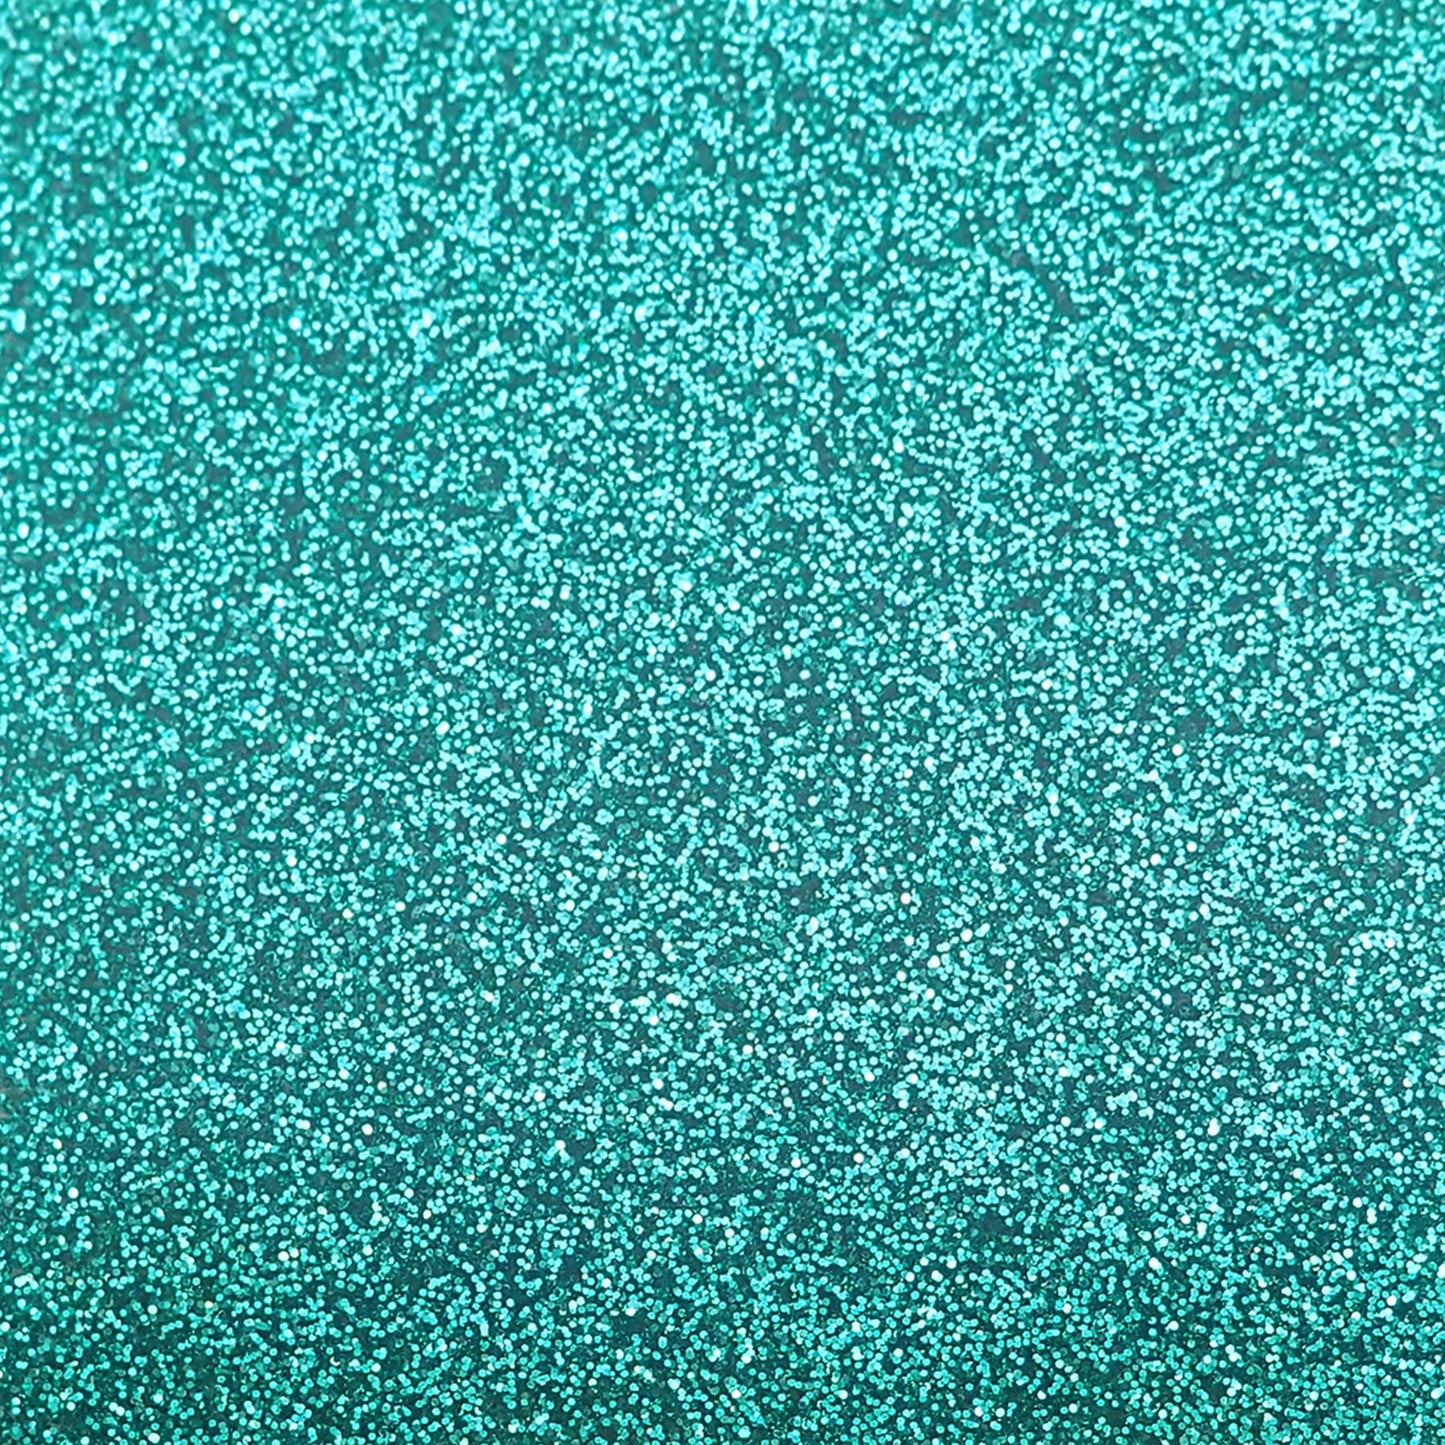 Incudo Emerald Green 2-Sided Glitter Acrylic Sheet - 300x200x3mm (11.8x7.87x0.12")